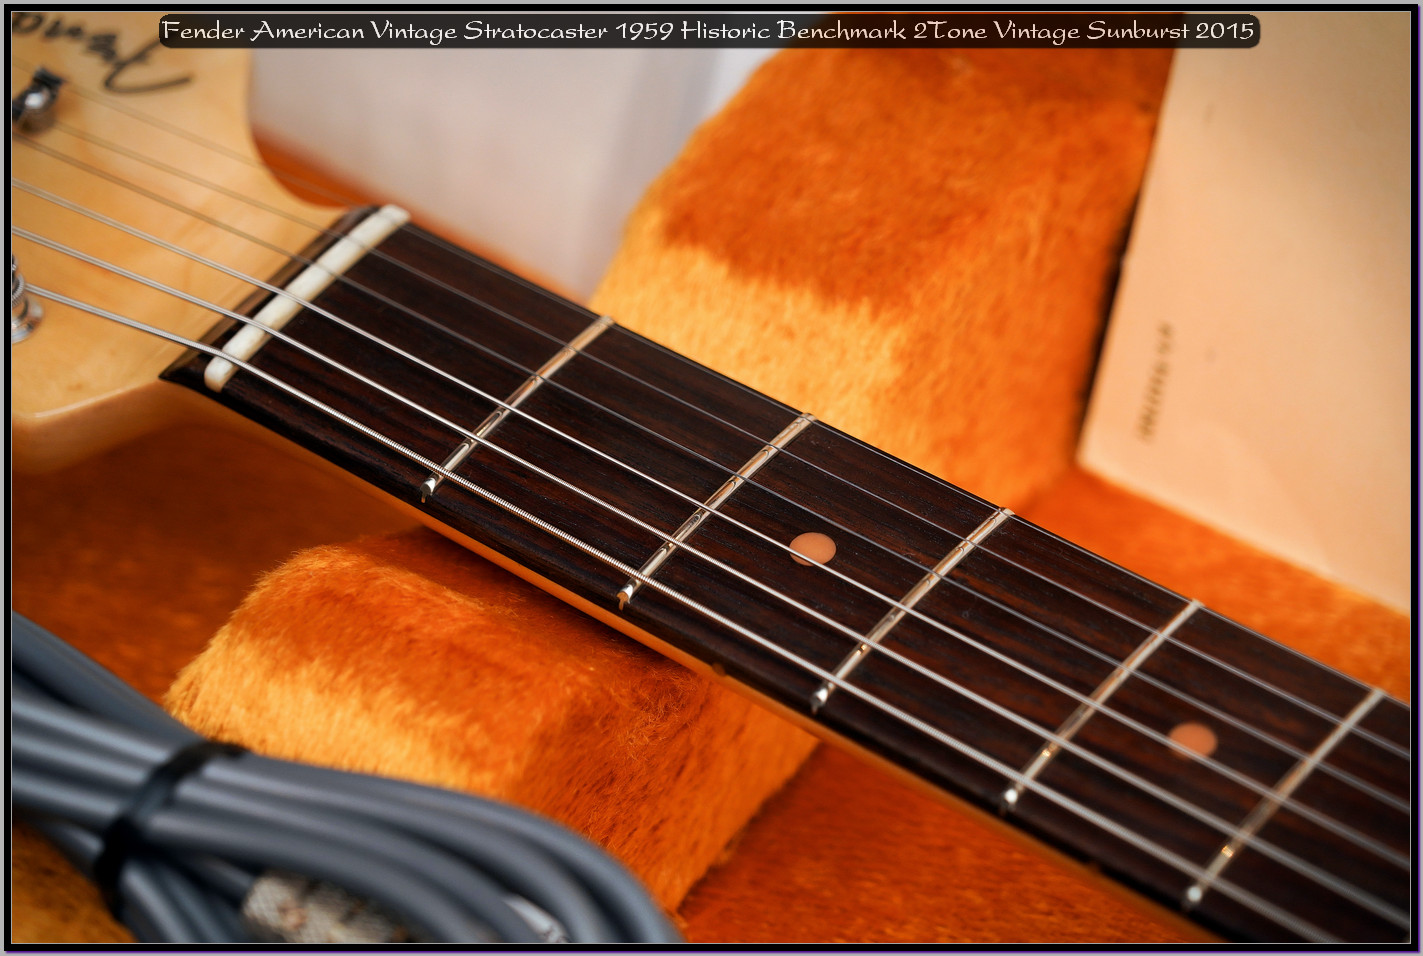 Fender American Vintage Stratocaster 1959 Historic Benchmark 2Tone Vintage Sunburst 2015 08_x1400.jpg